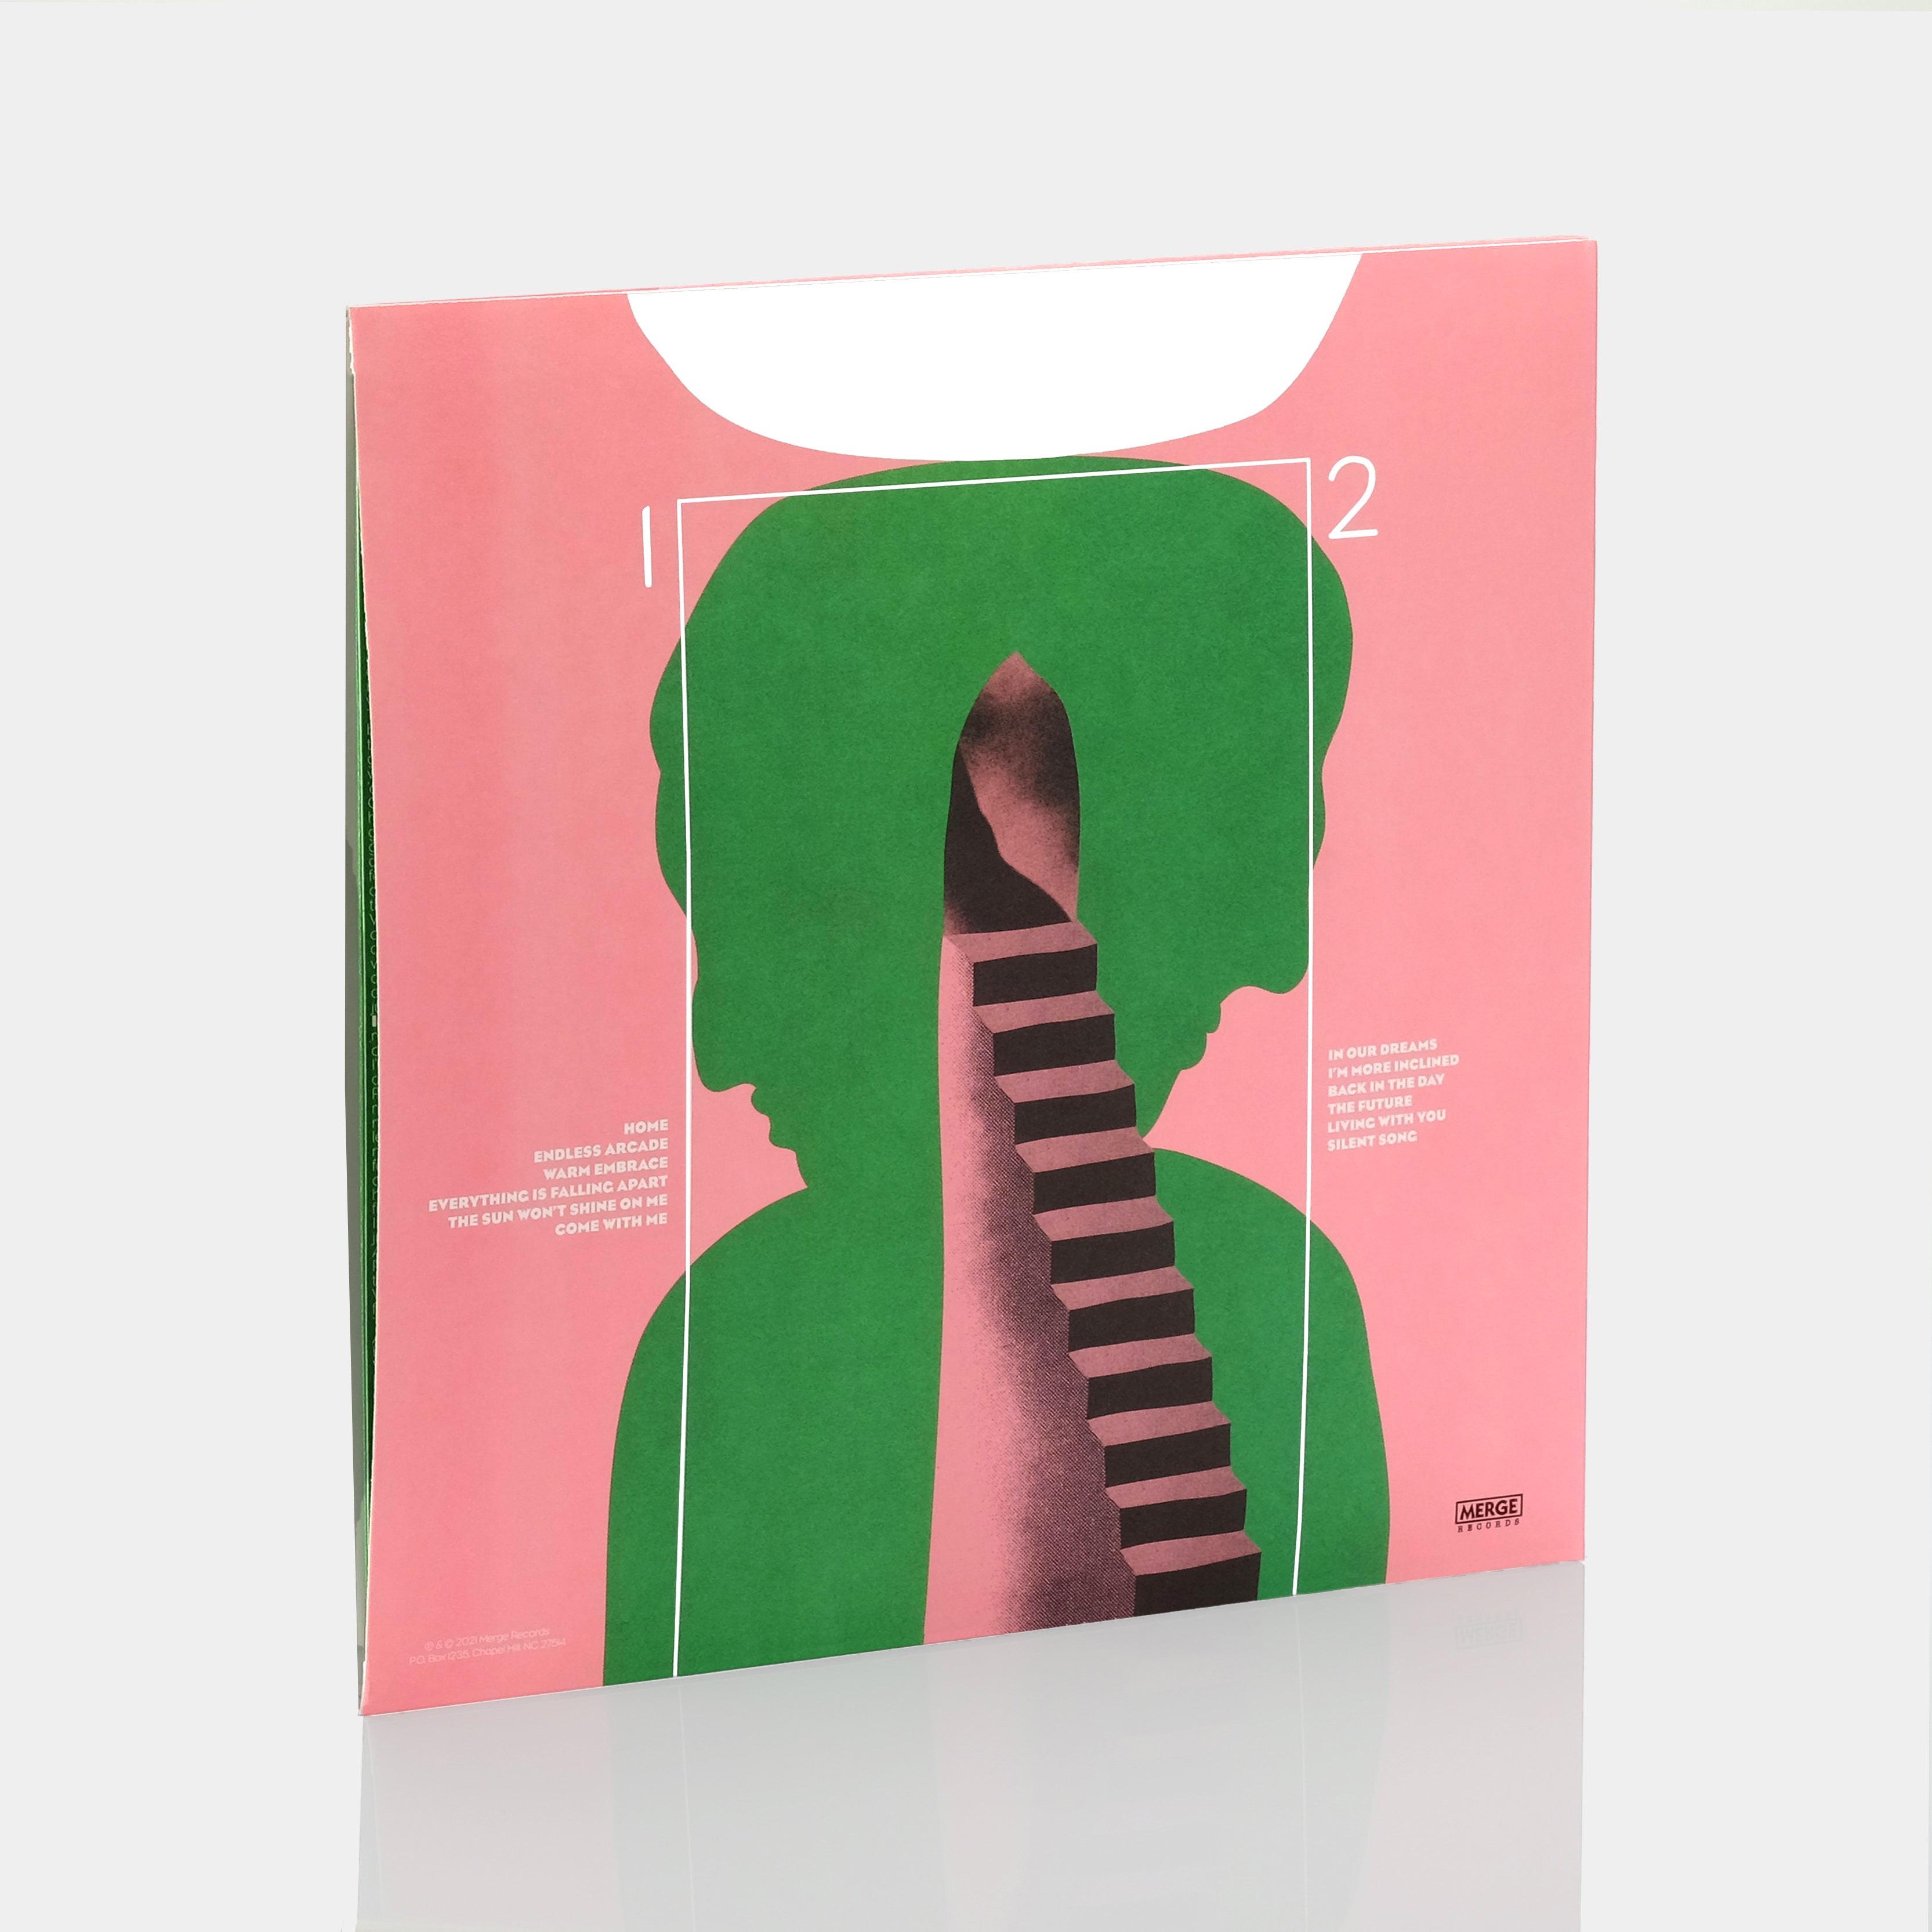 Teenage Fanclub - Endless Arcade LP Pink Vinyl Record